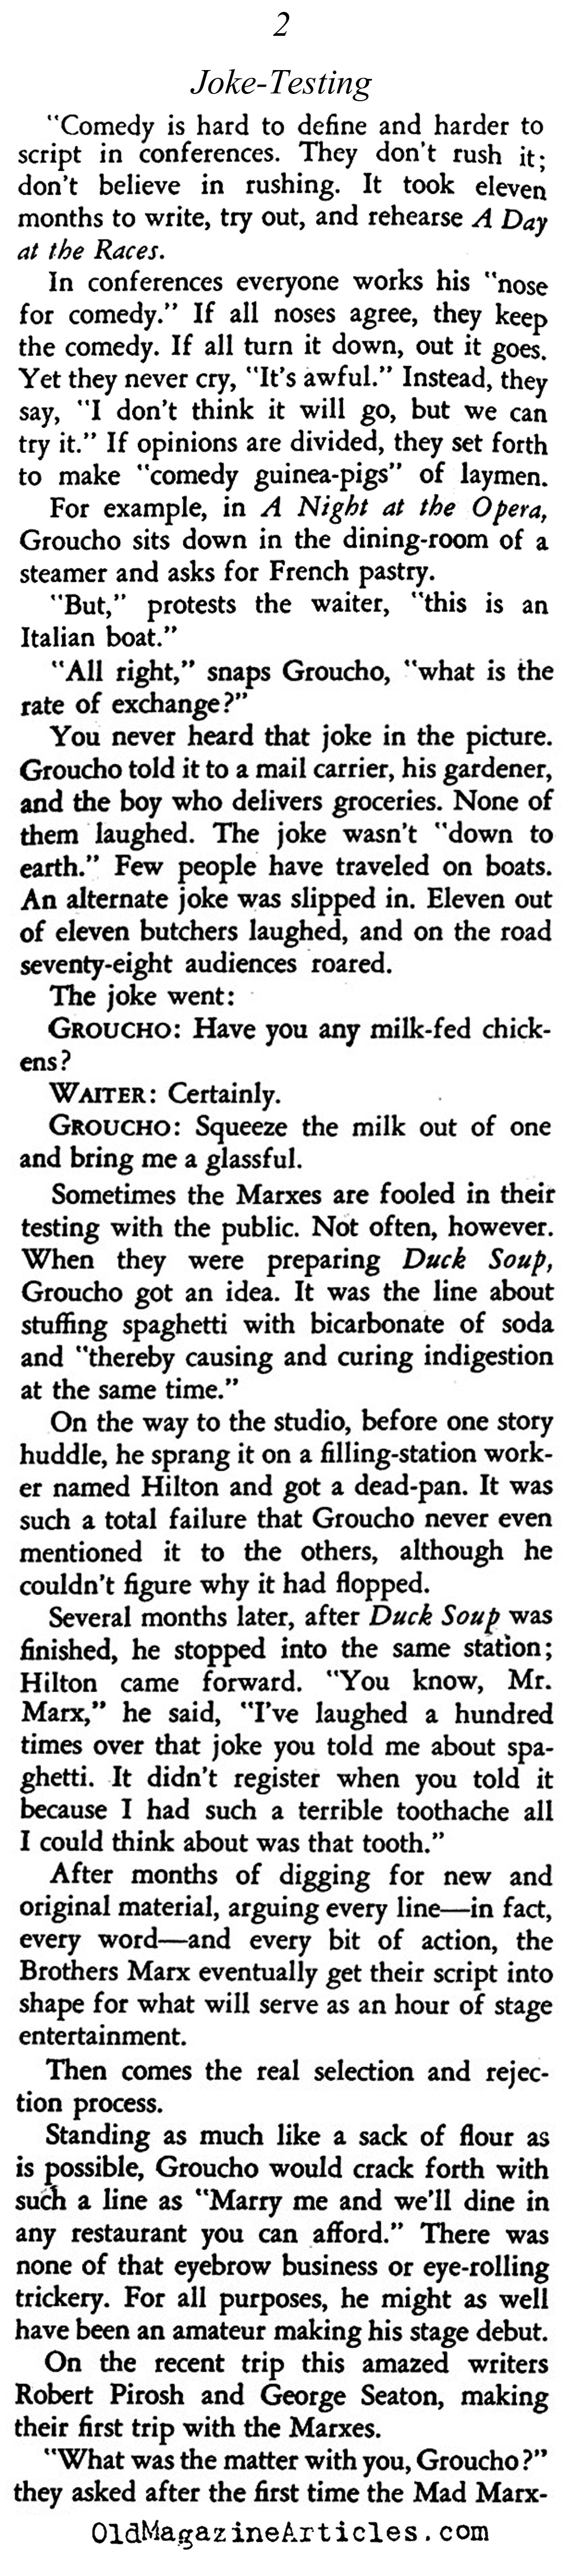 The Marx Brothers & the Joke Development Process (Stage Magazine, 1937)